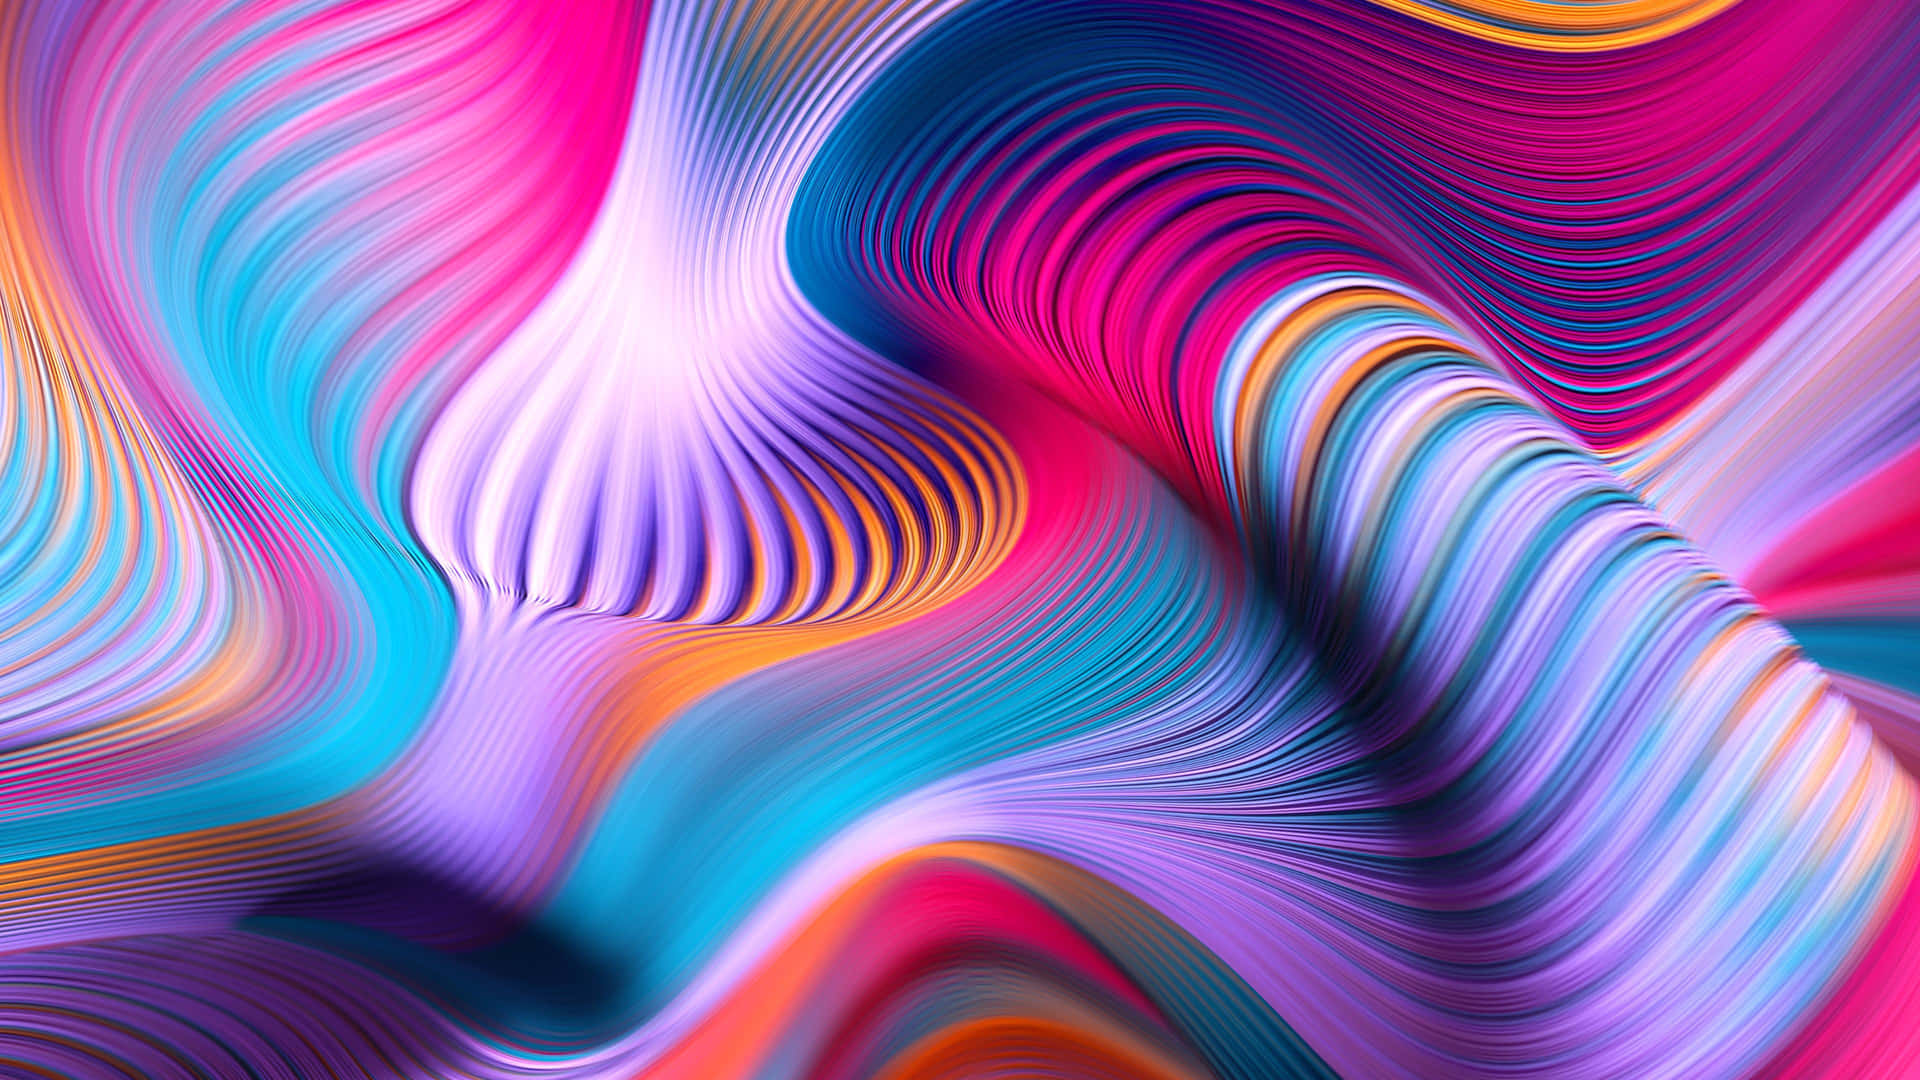 Vibrant Abstract Wave Art Wallpaper